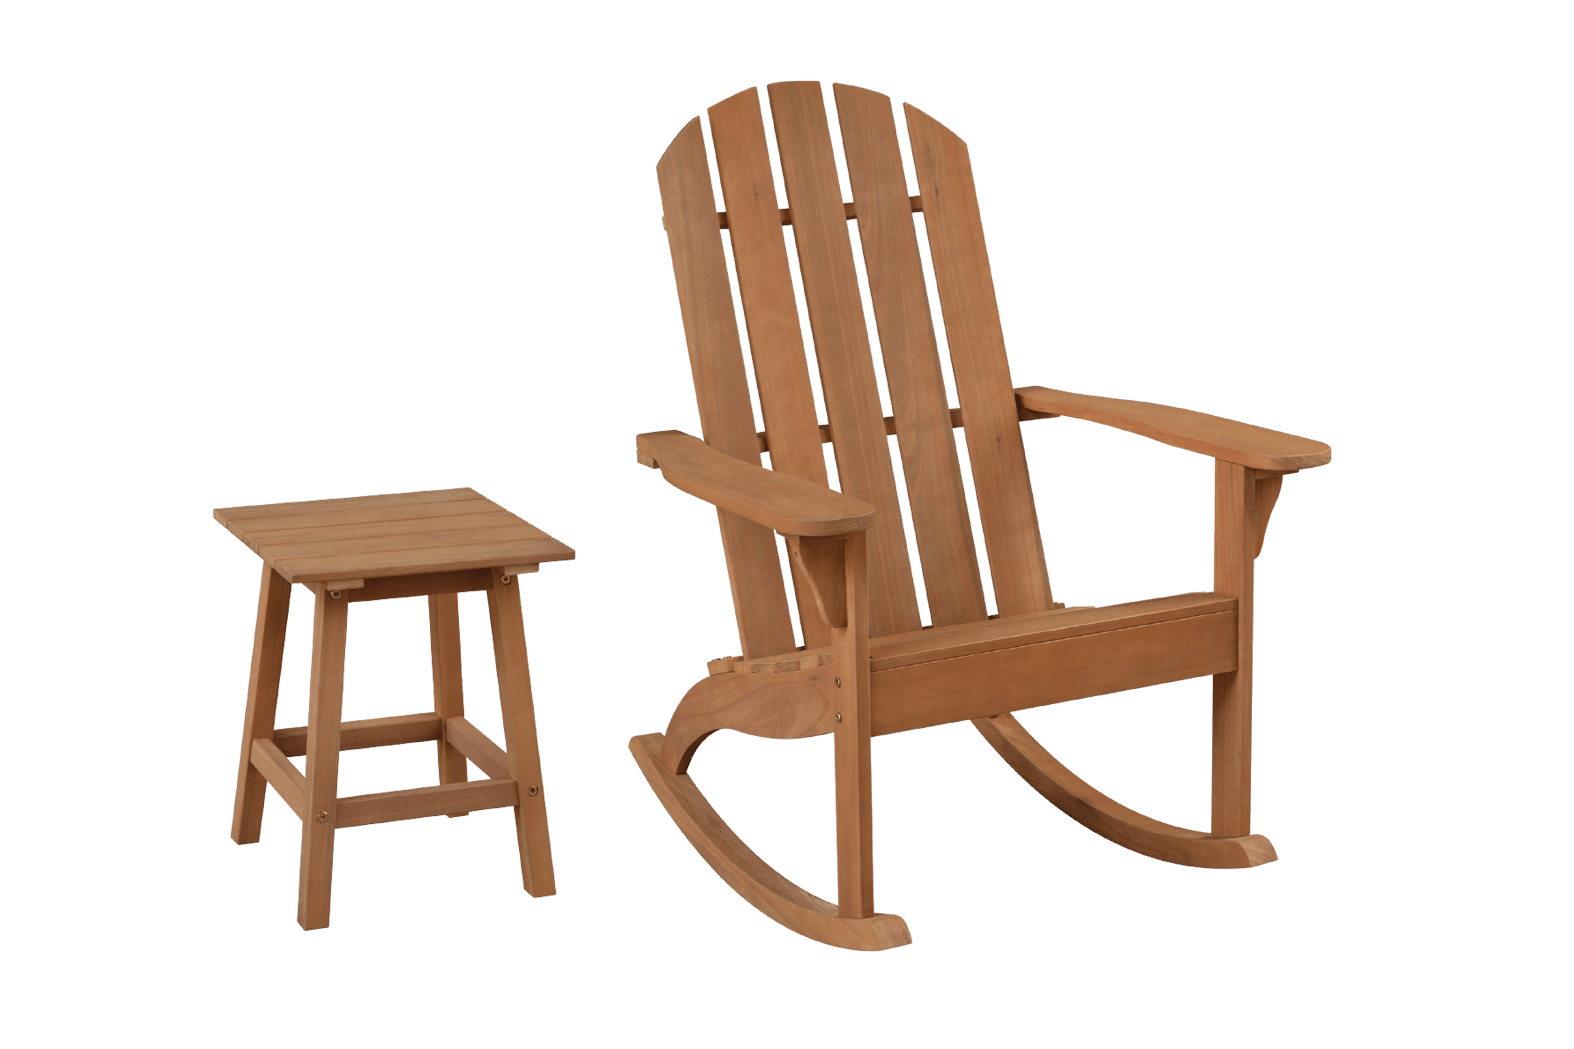 Wooden Rocking Chair Repair